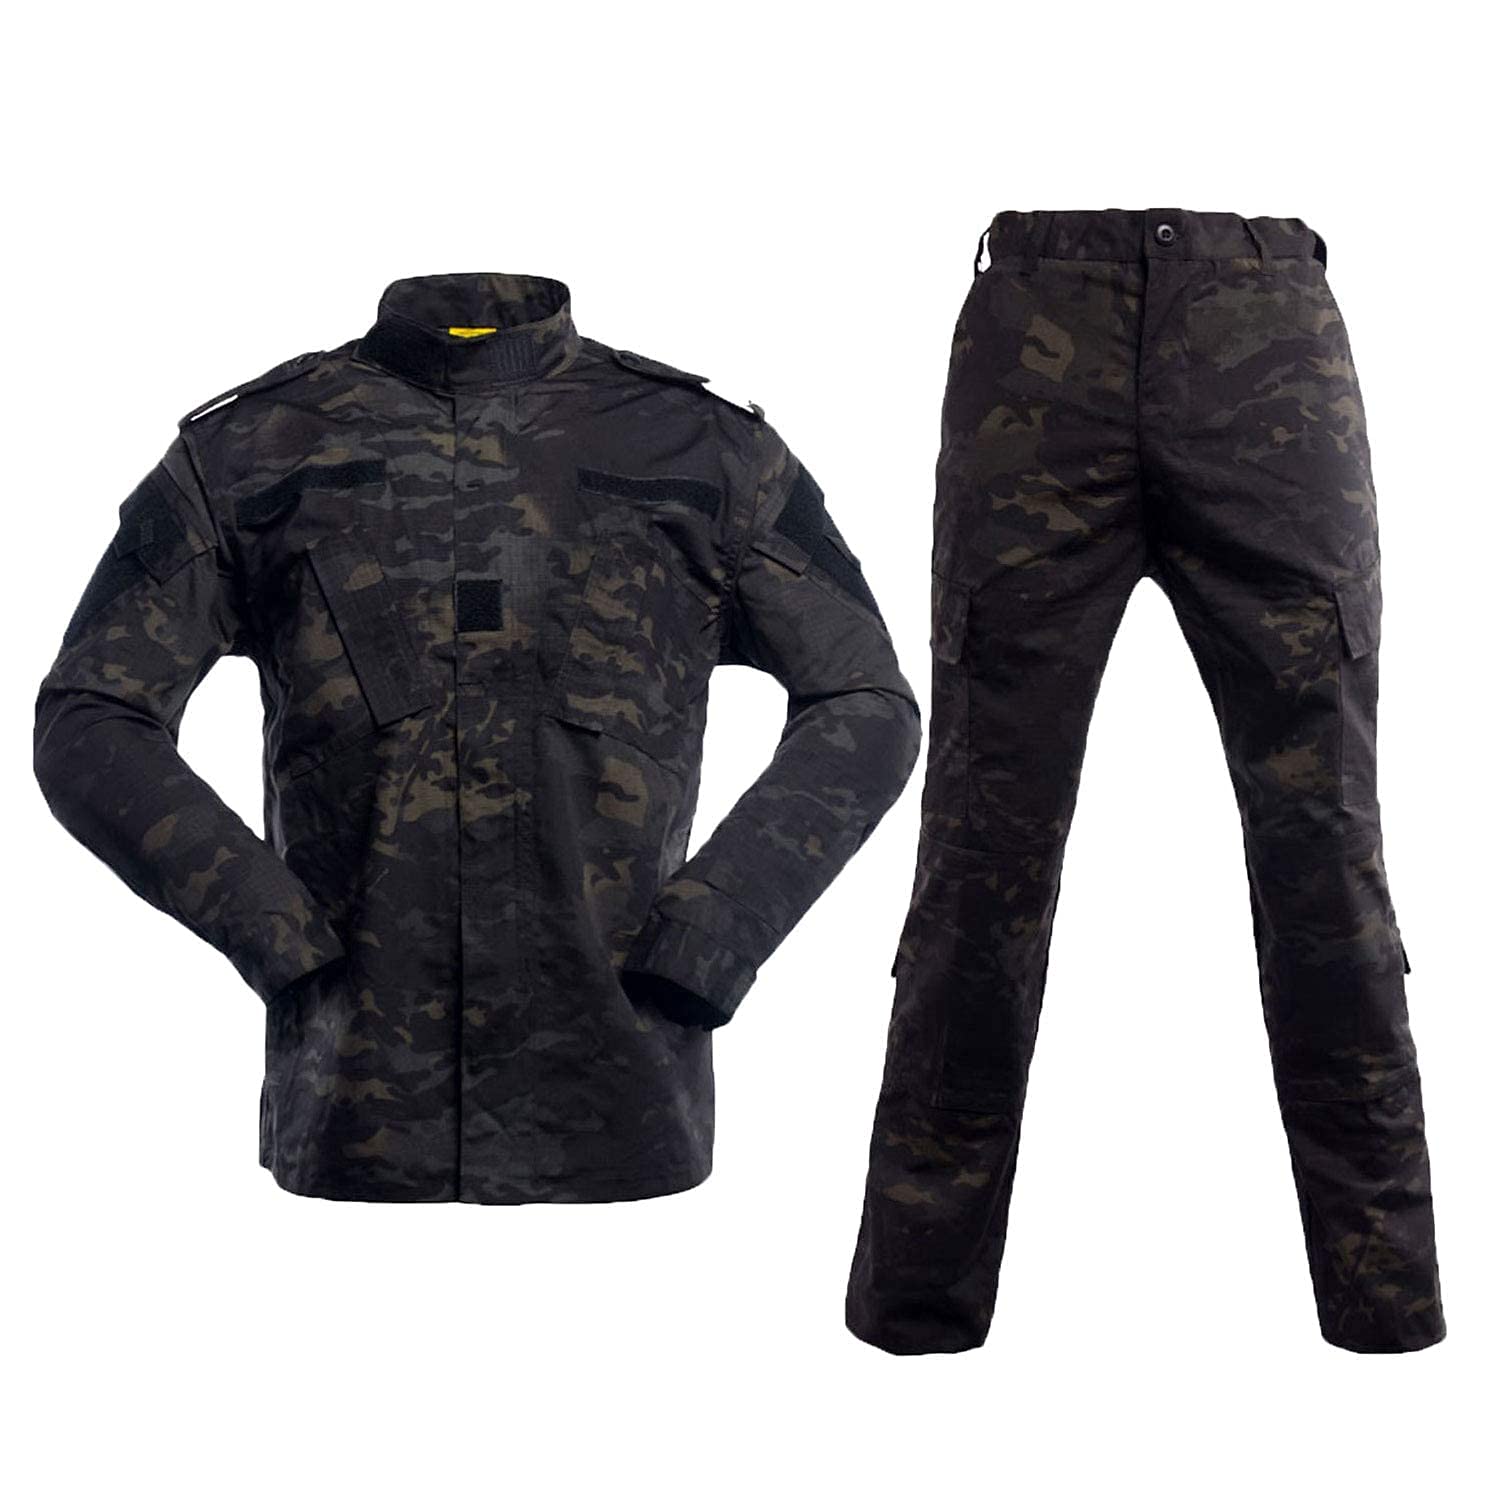 LANBAOSI Men's Tactical Jacket and Pants Military Camo Hunting ACU Uniform 2PC Set Army Multicam Apparel Suit (Medium Slim, Black CP)